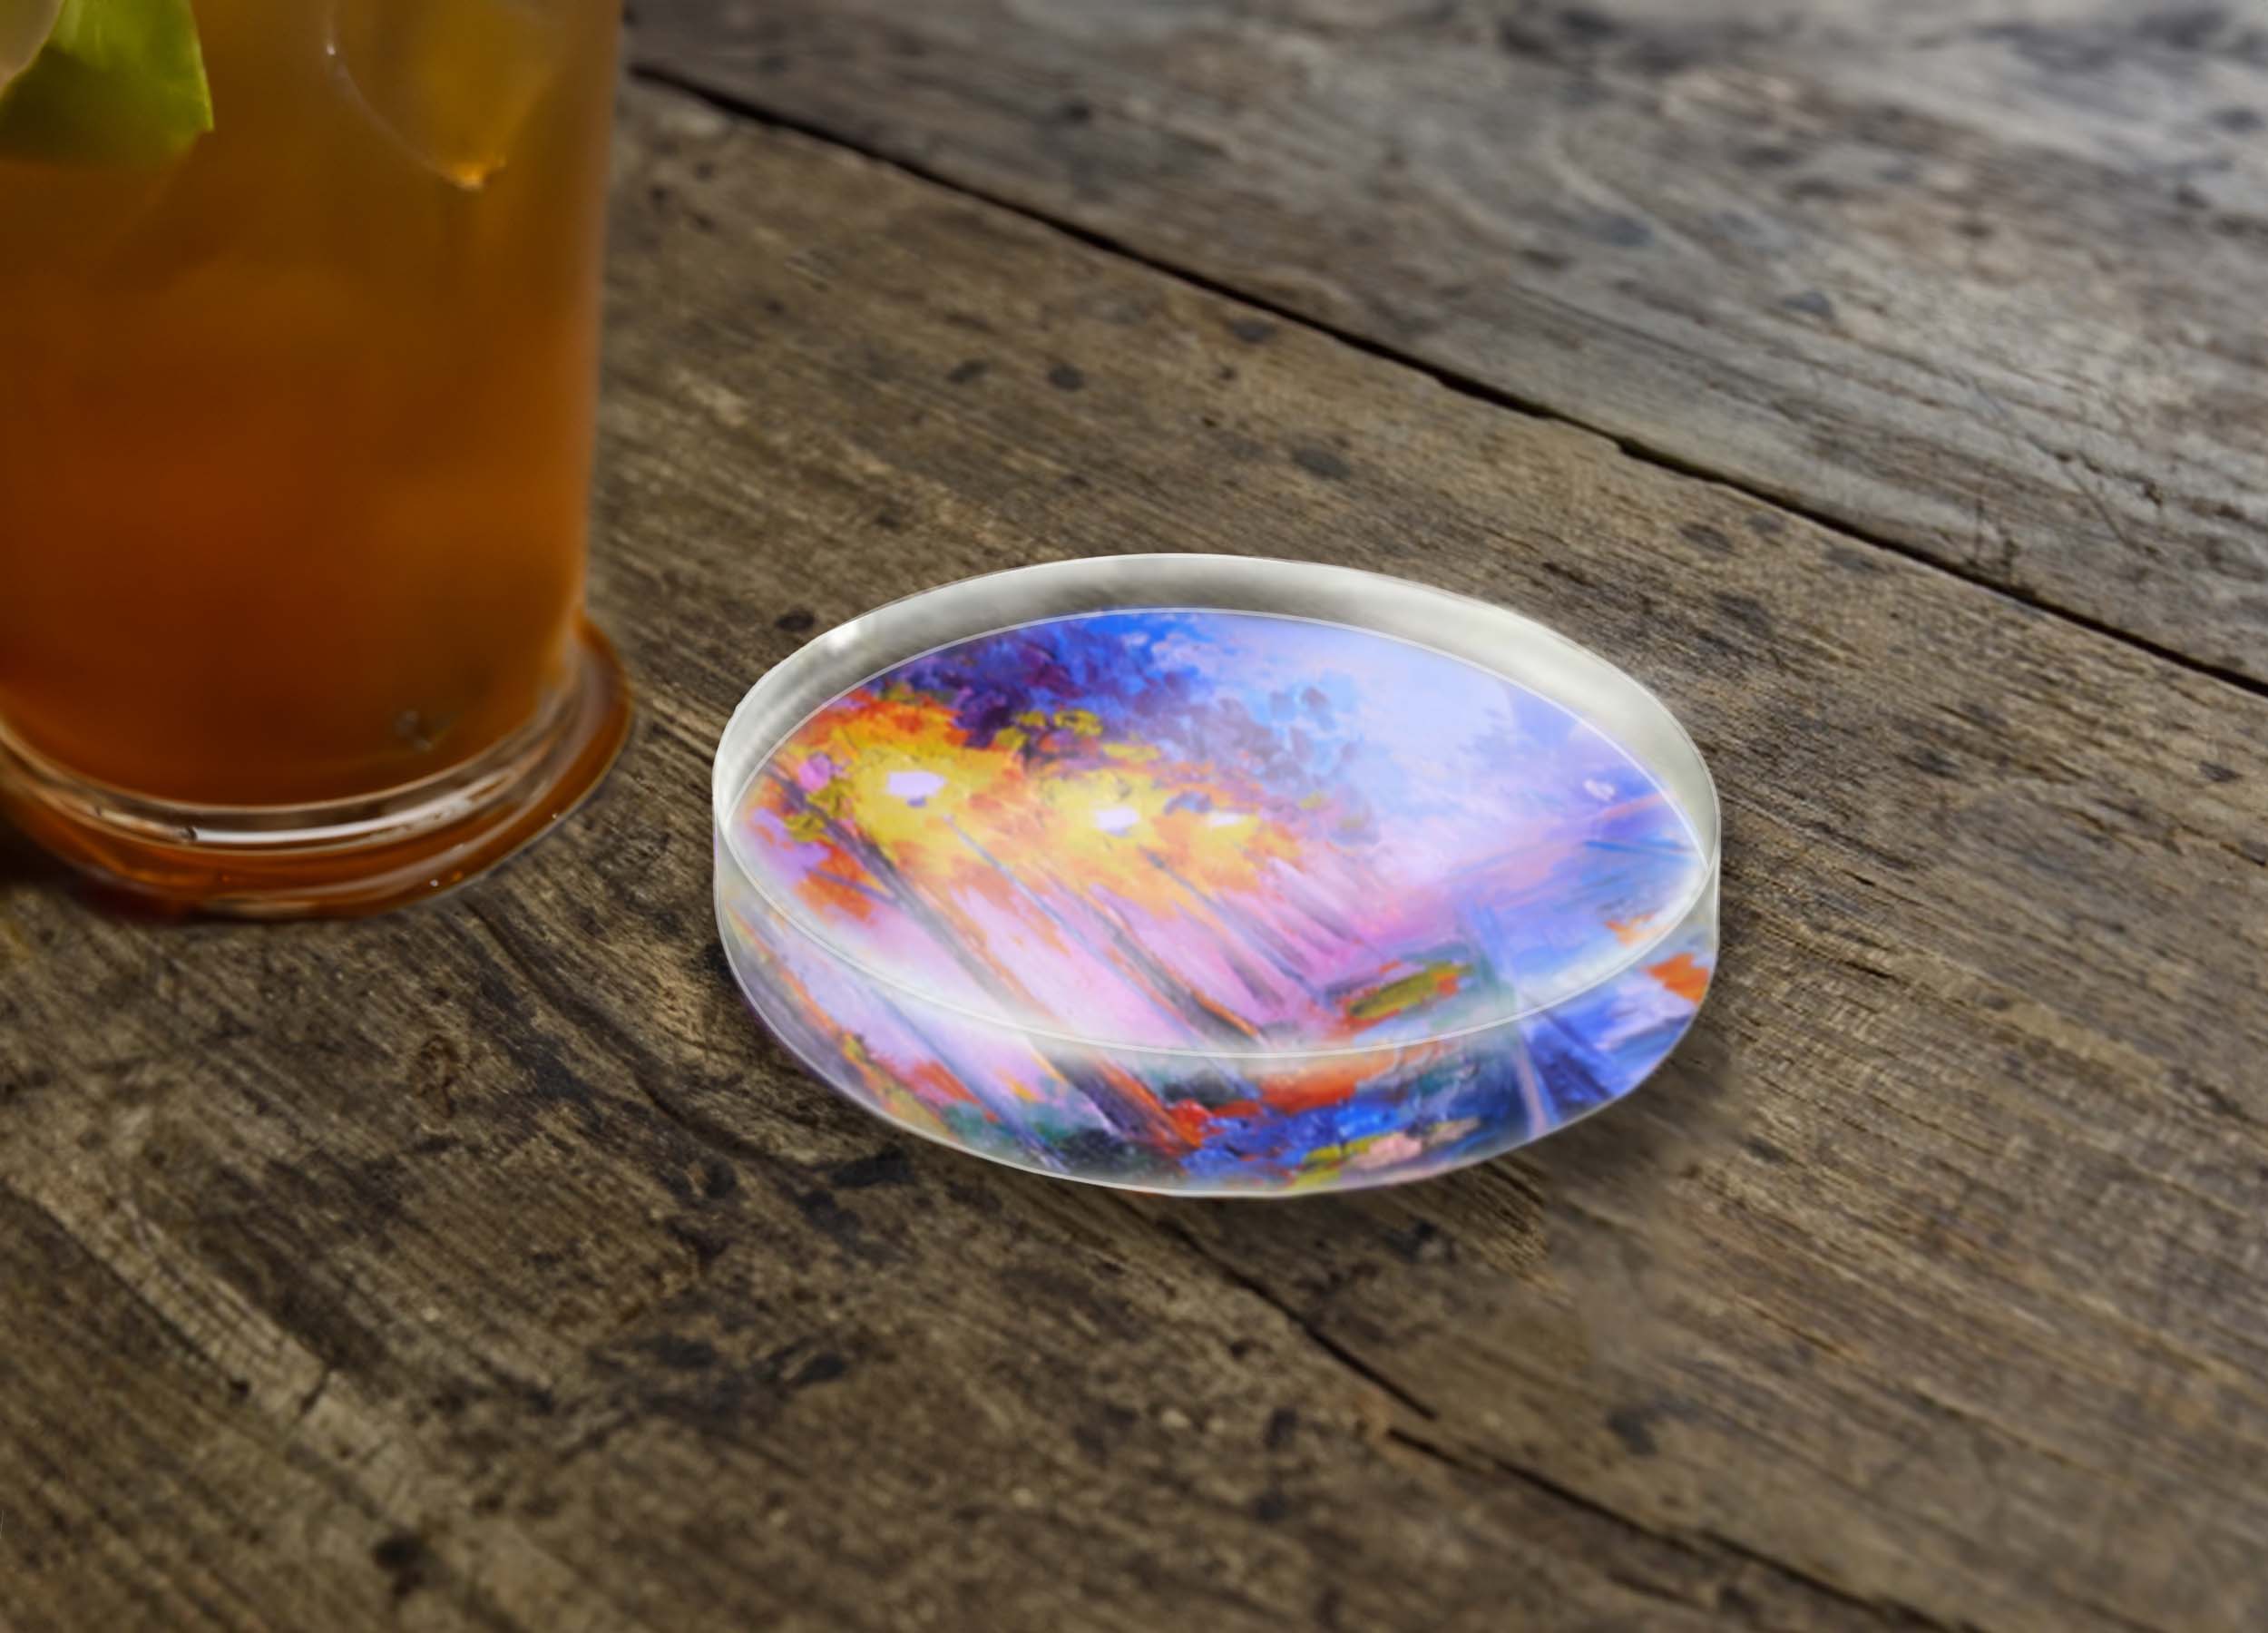 Acrylic artwork coaster on wood table